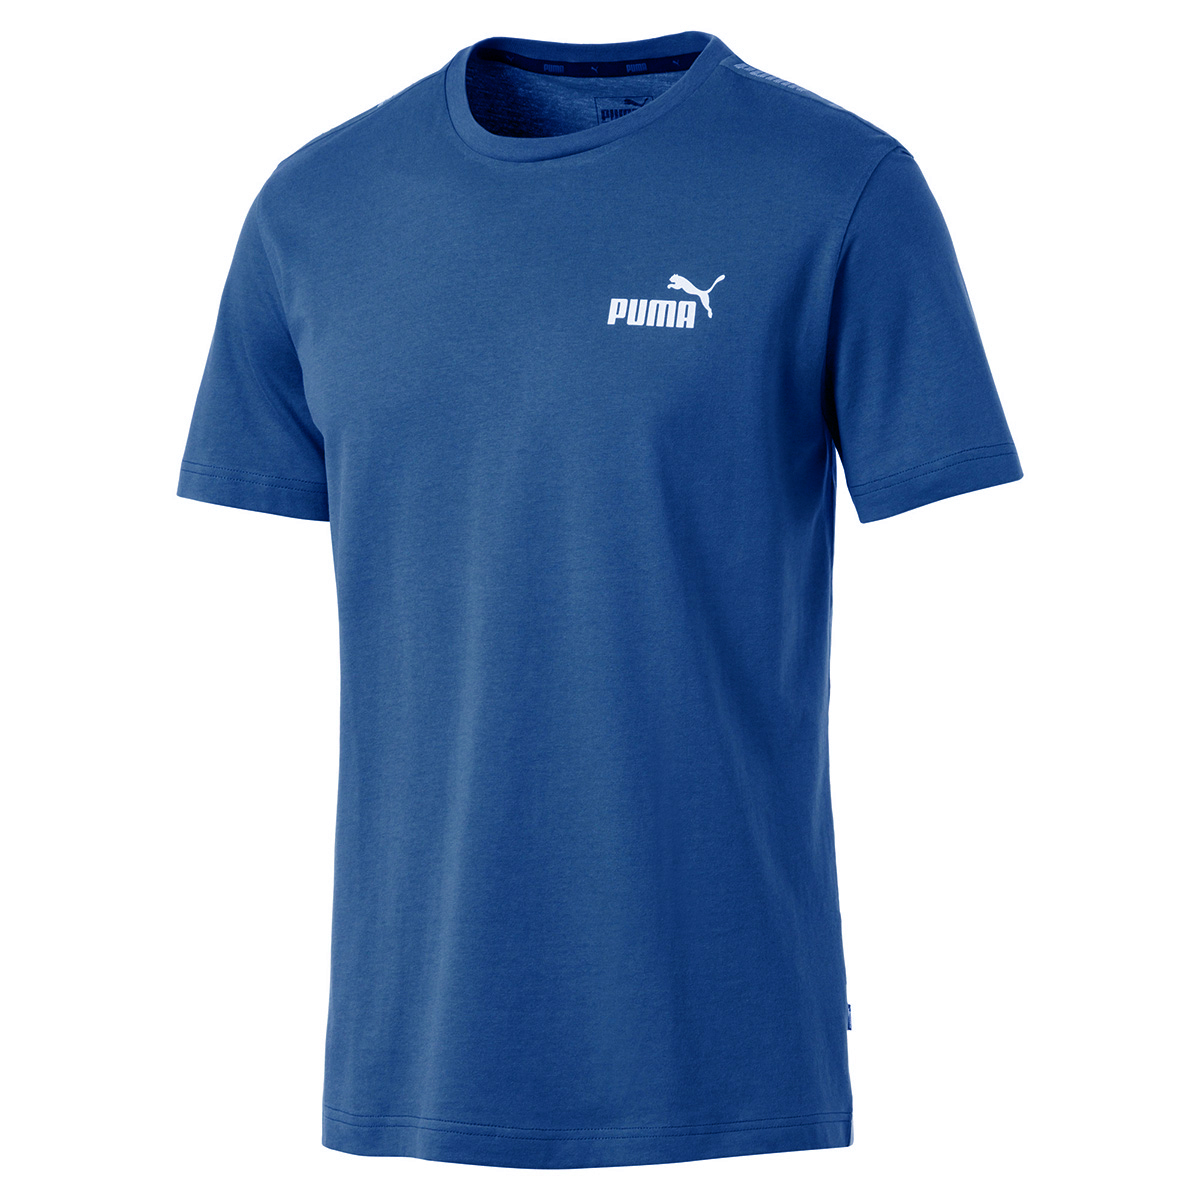 PUMA Herren Amplified Tee T-Shirt blau 854655 29